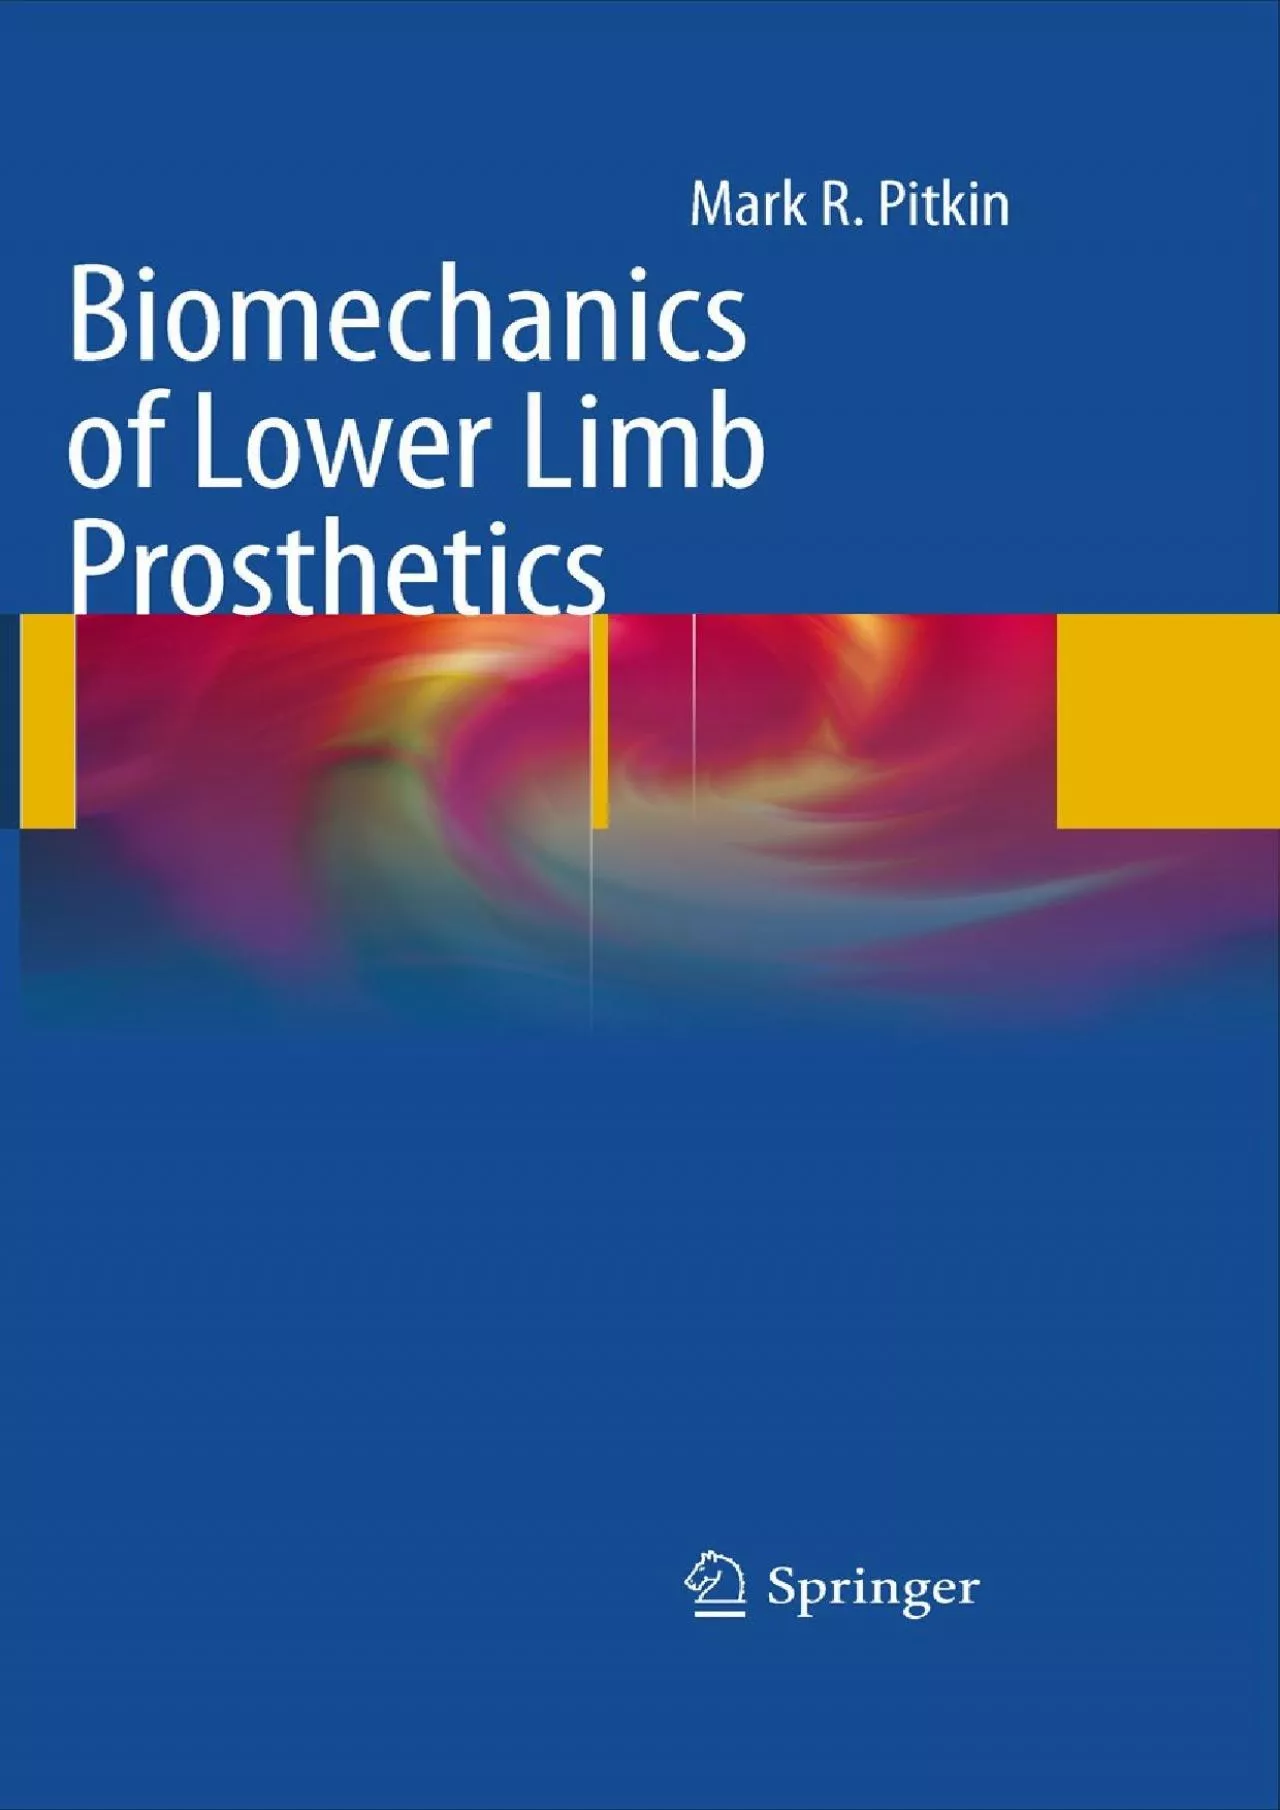 (BOOK)-Biomechanics of Lower Limb Prosthetics